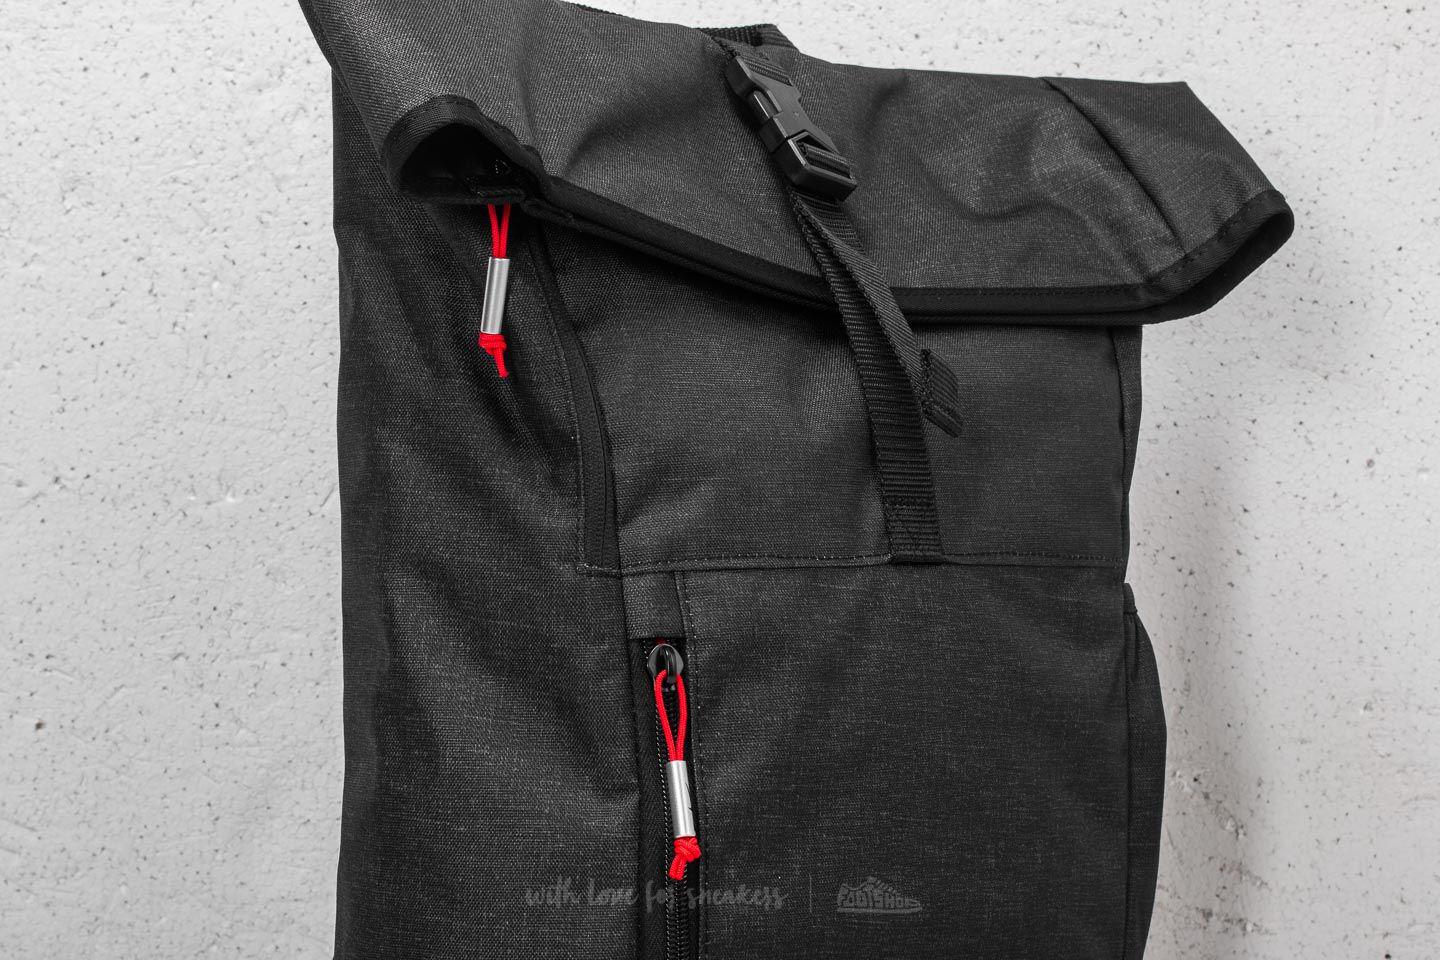 Nike Sport Golf Backpack Black/ Black/ Anthracite for Men | Lyst